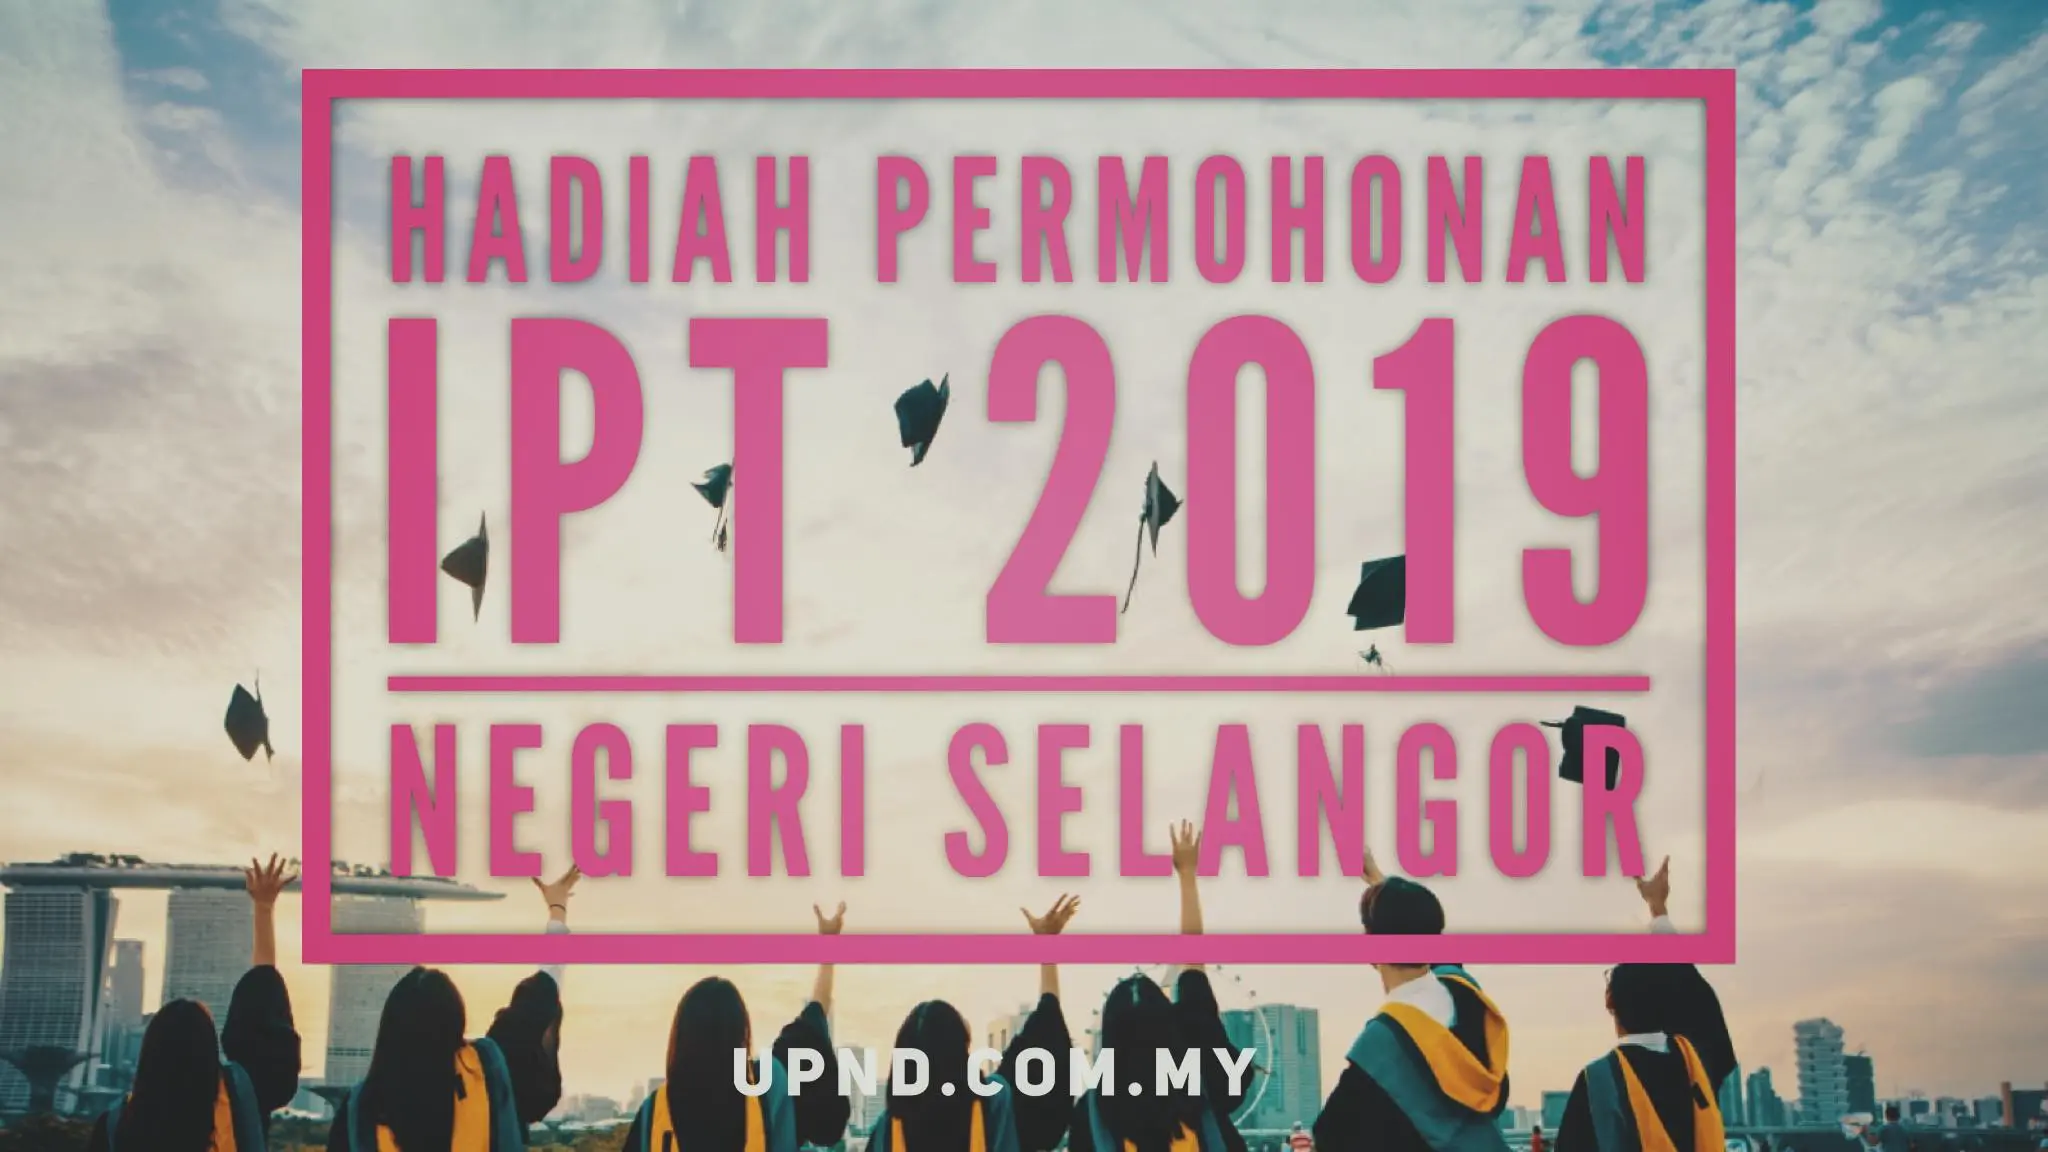 Permohonan Hadiah Pengajian IPT Selangor 2019 Online